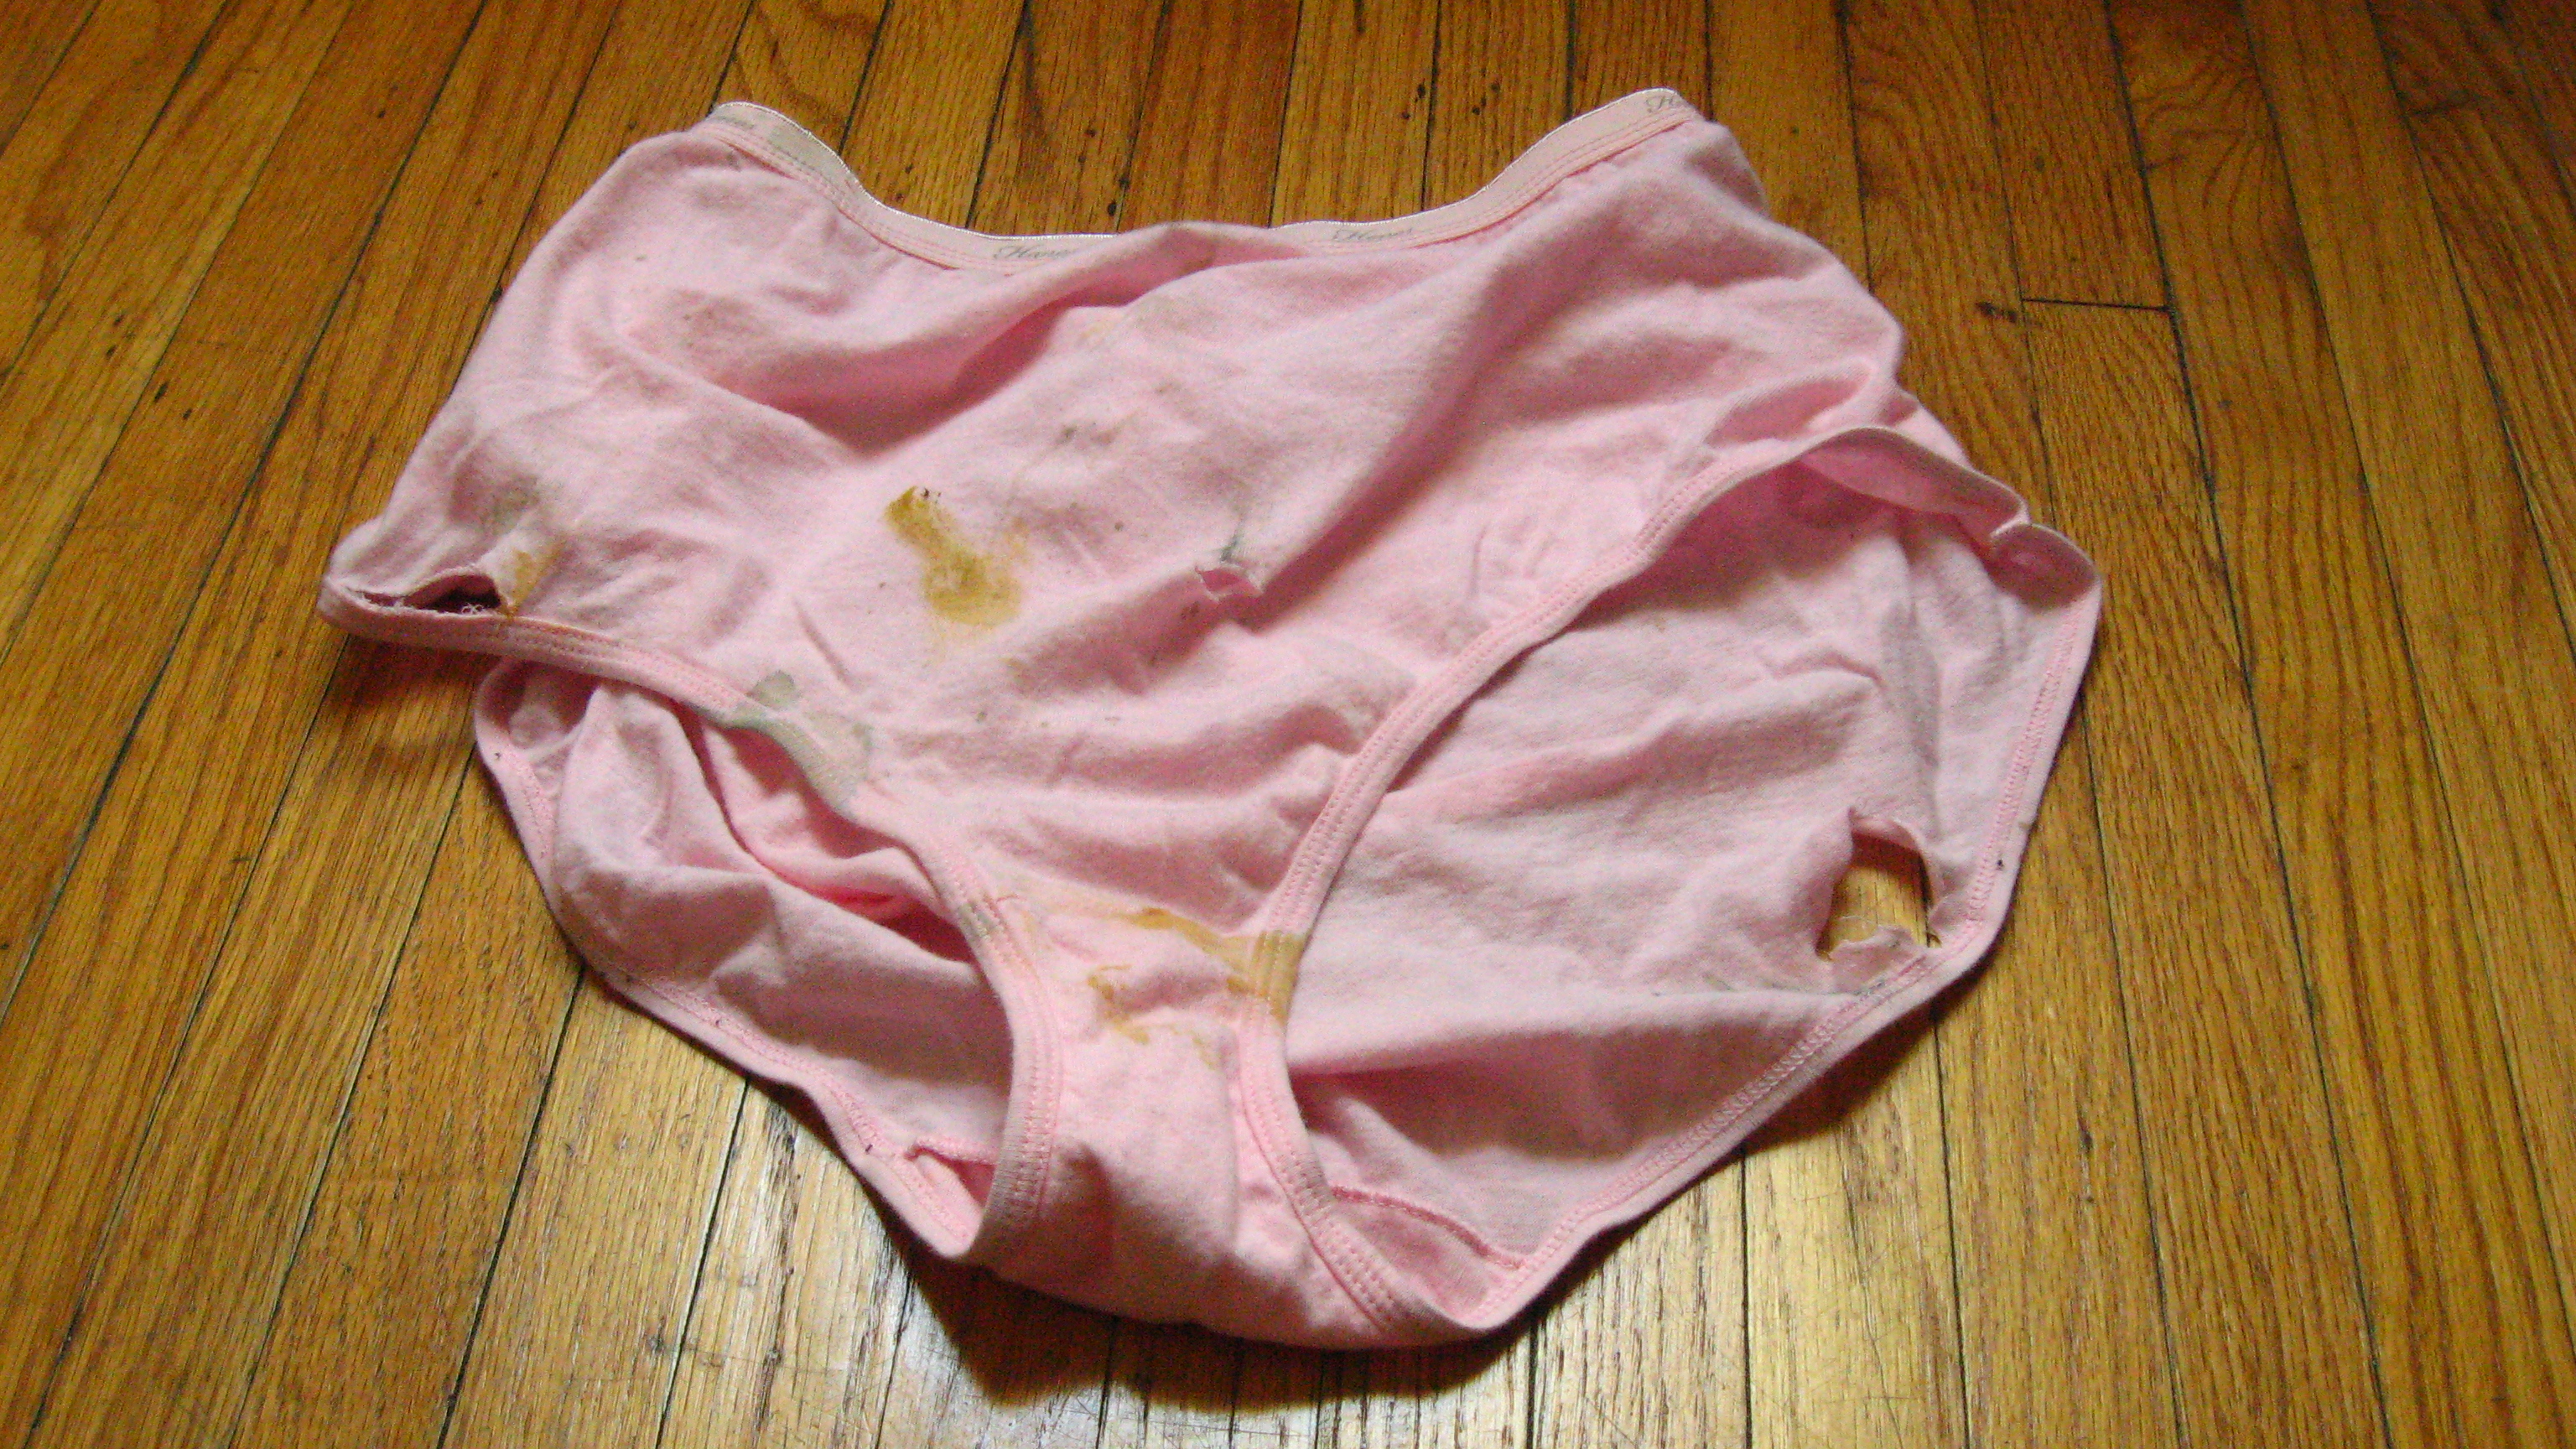 Natalia wets pink panties